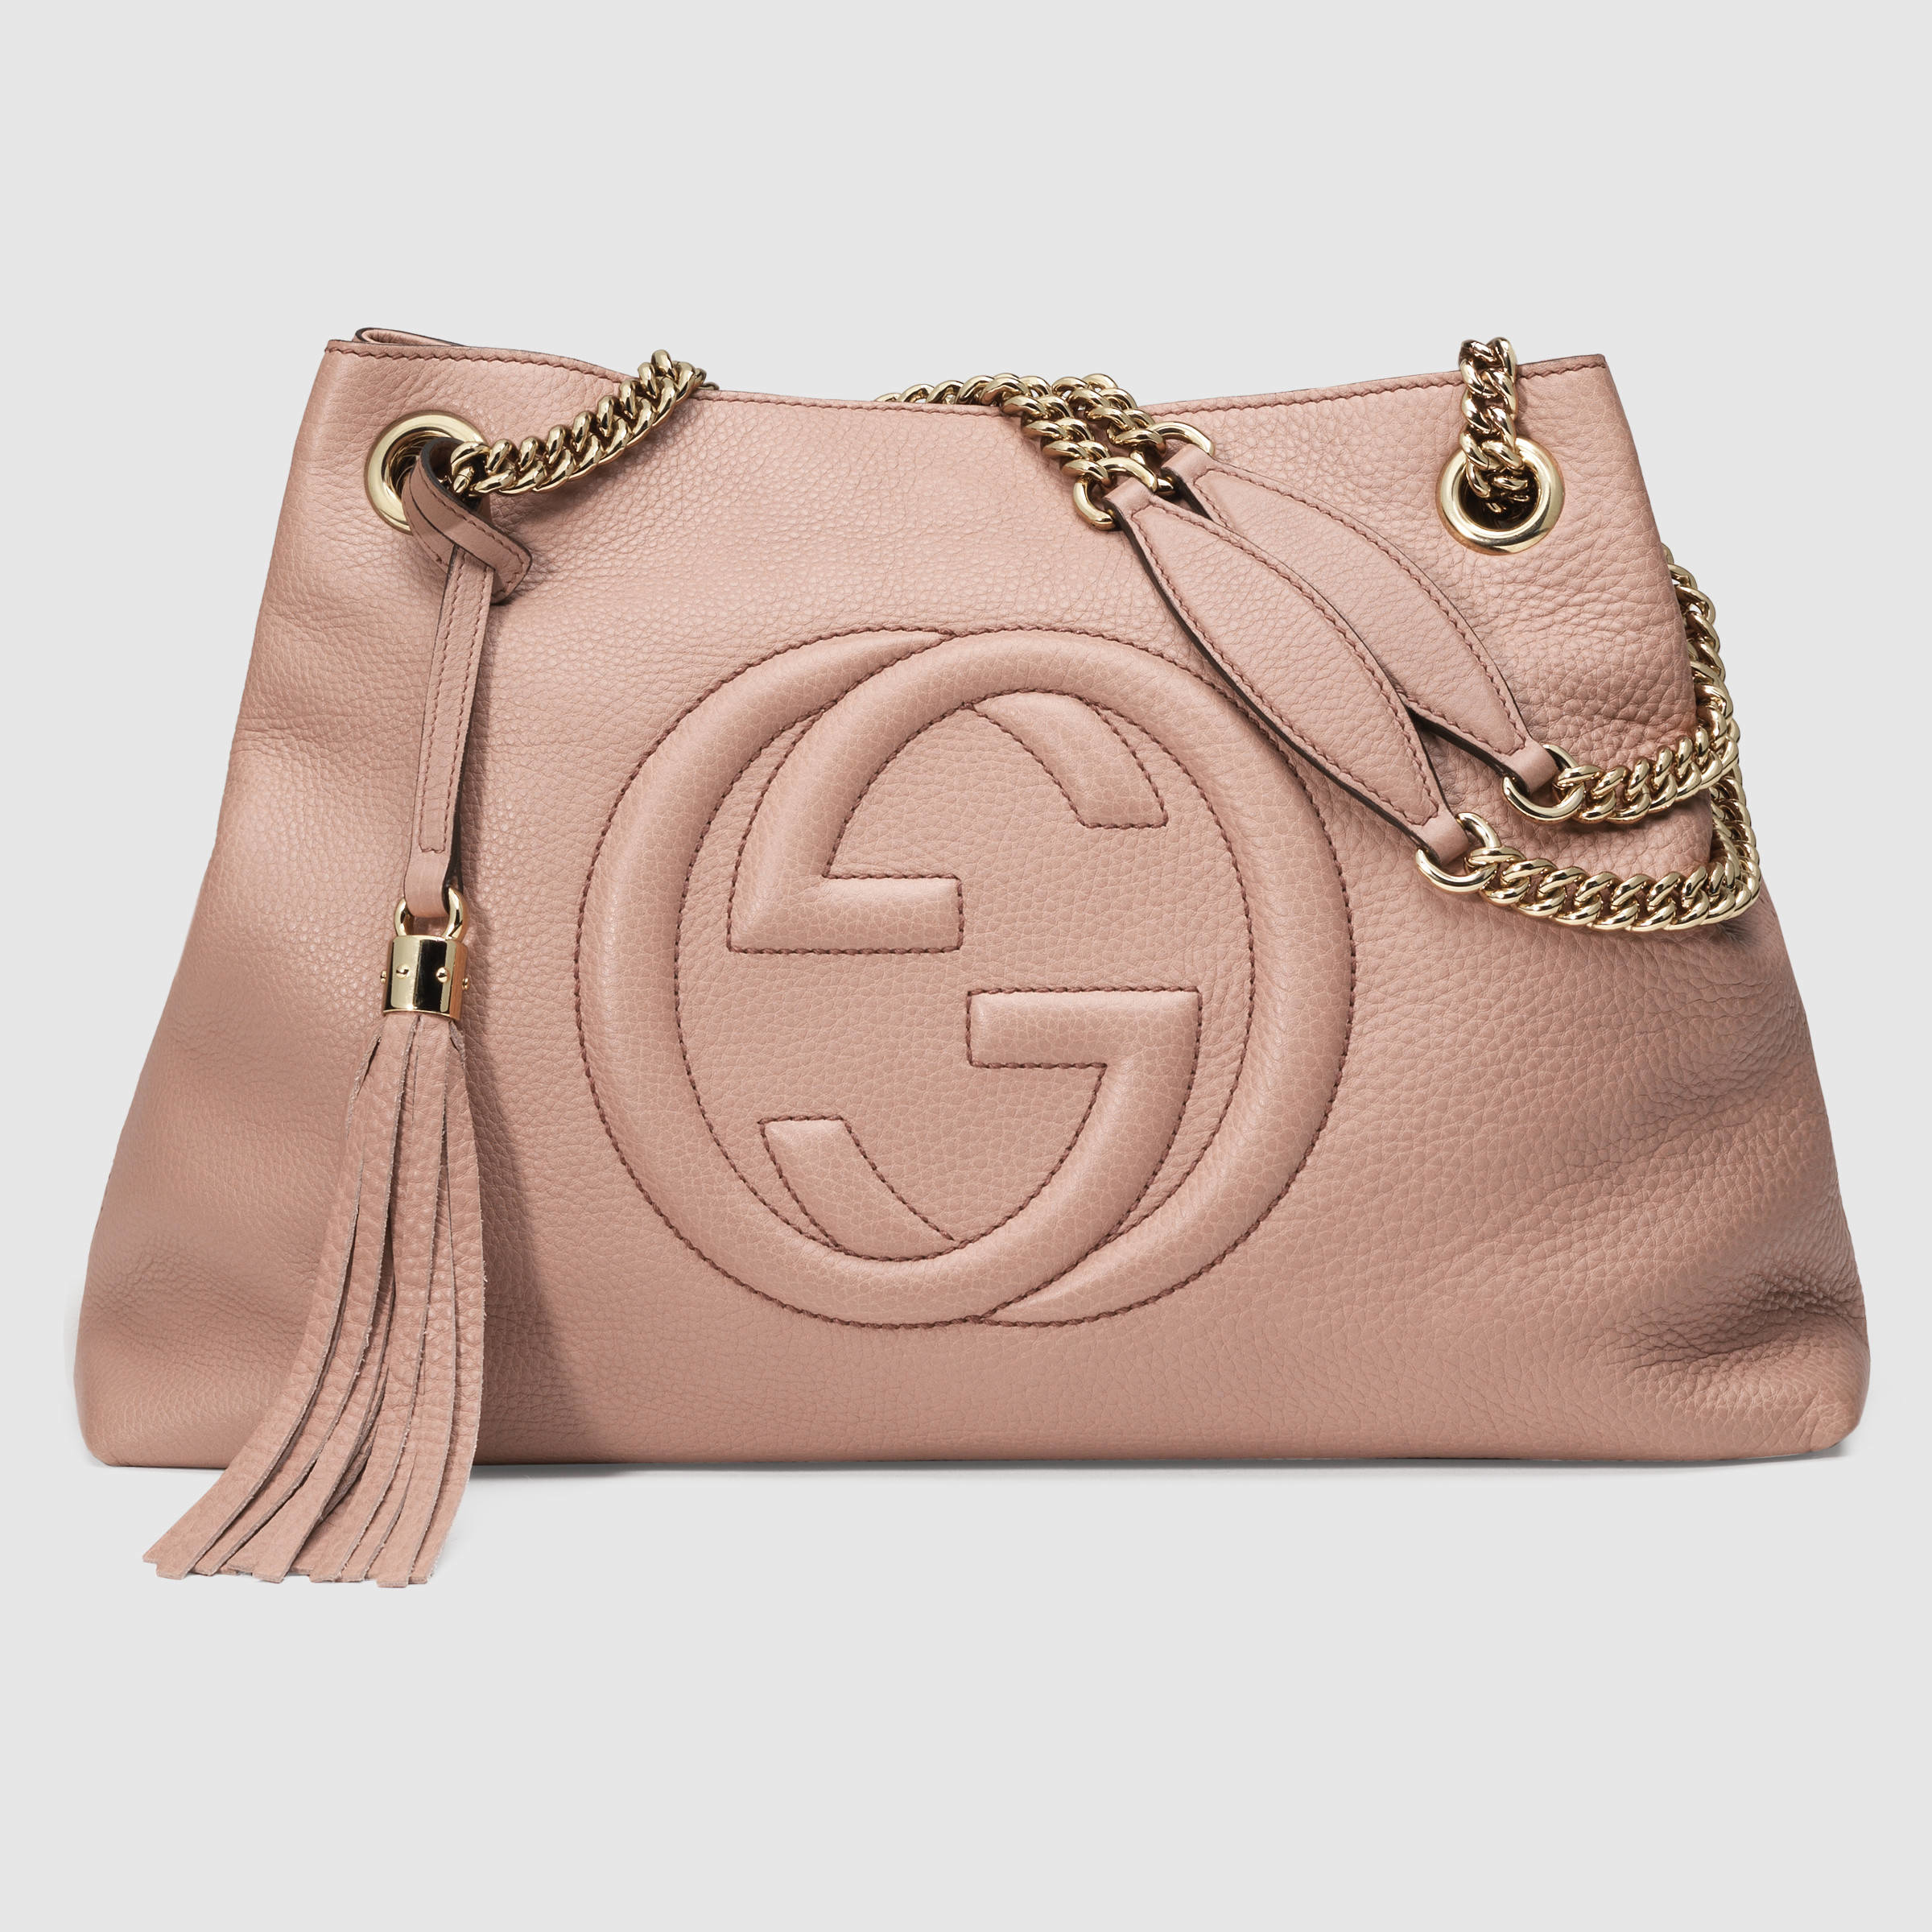 Gucci Soho Leather Shoulder Bag in Light Pink Leather (Pink) - Lyst